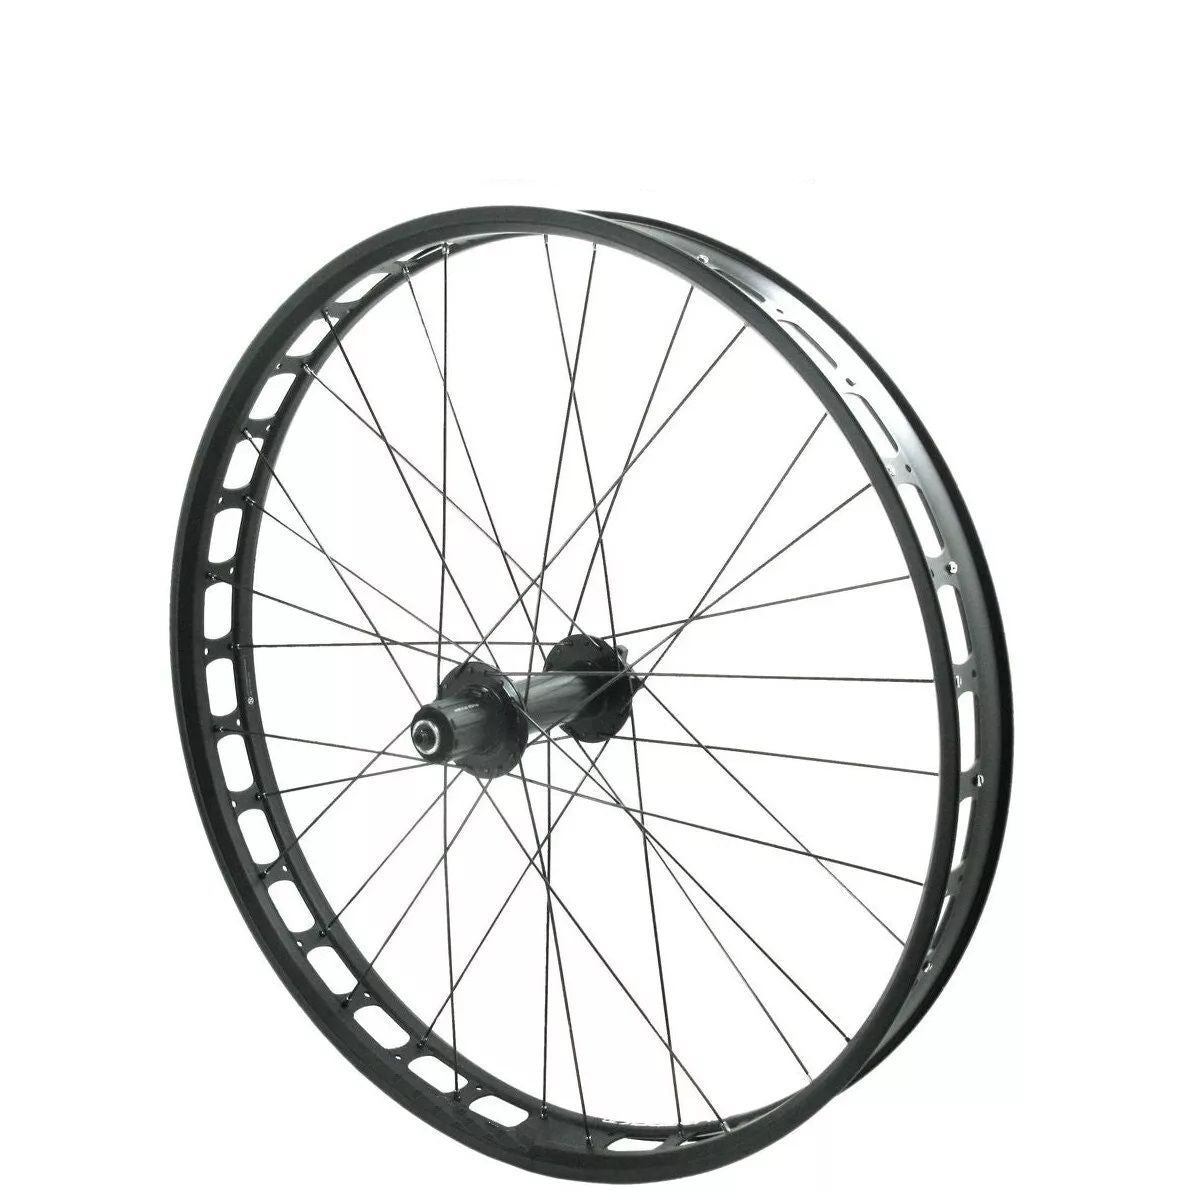 Alex Blizzerk 70 REAR 190mm QR Formula Tubeless Ready Fat Bike Wheel